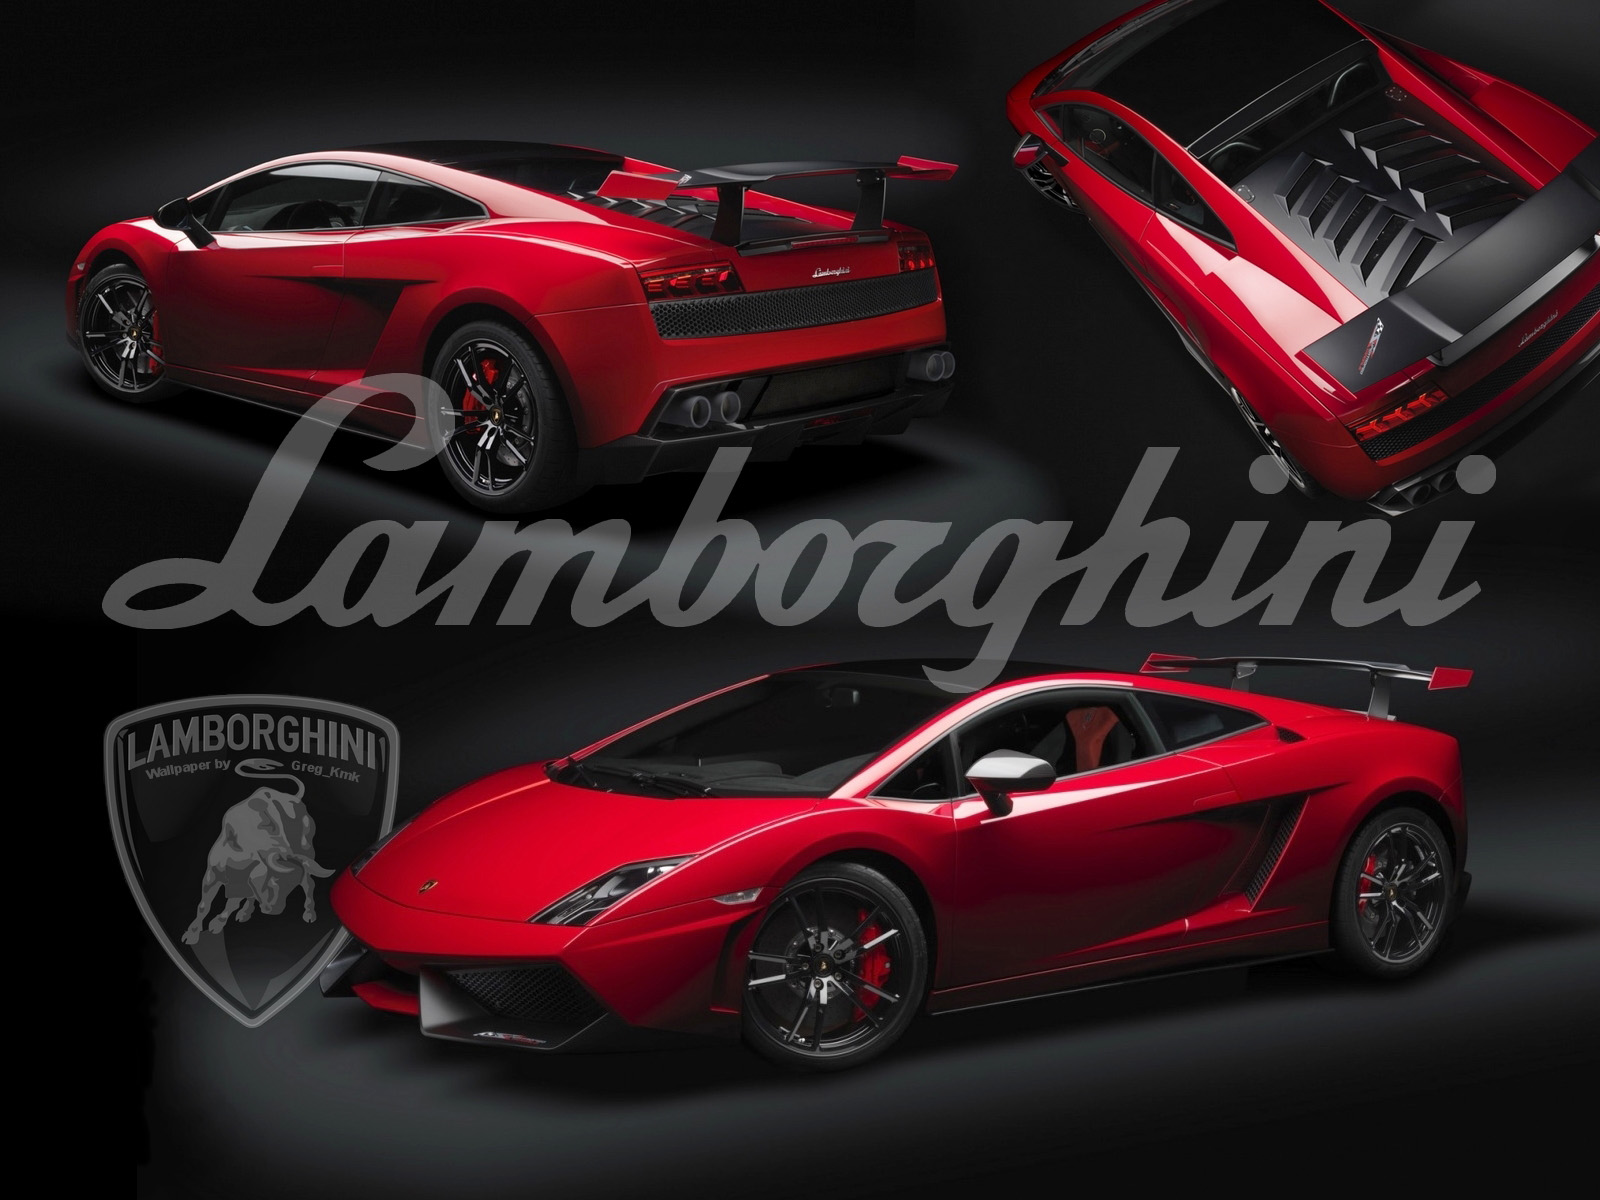 Download Lamborghini Gallardo Hd Wallpapers For Free, , HD Wallpaper & Backgrounds